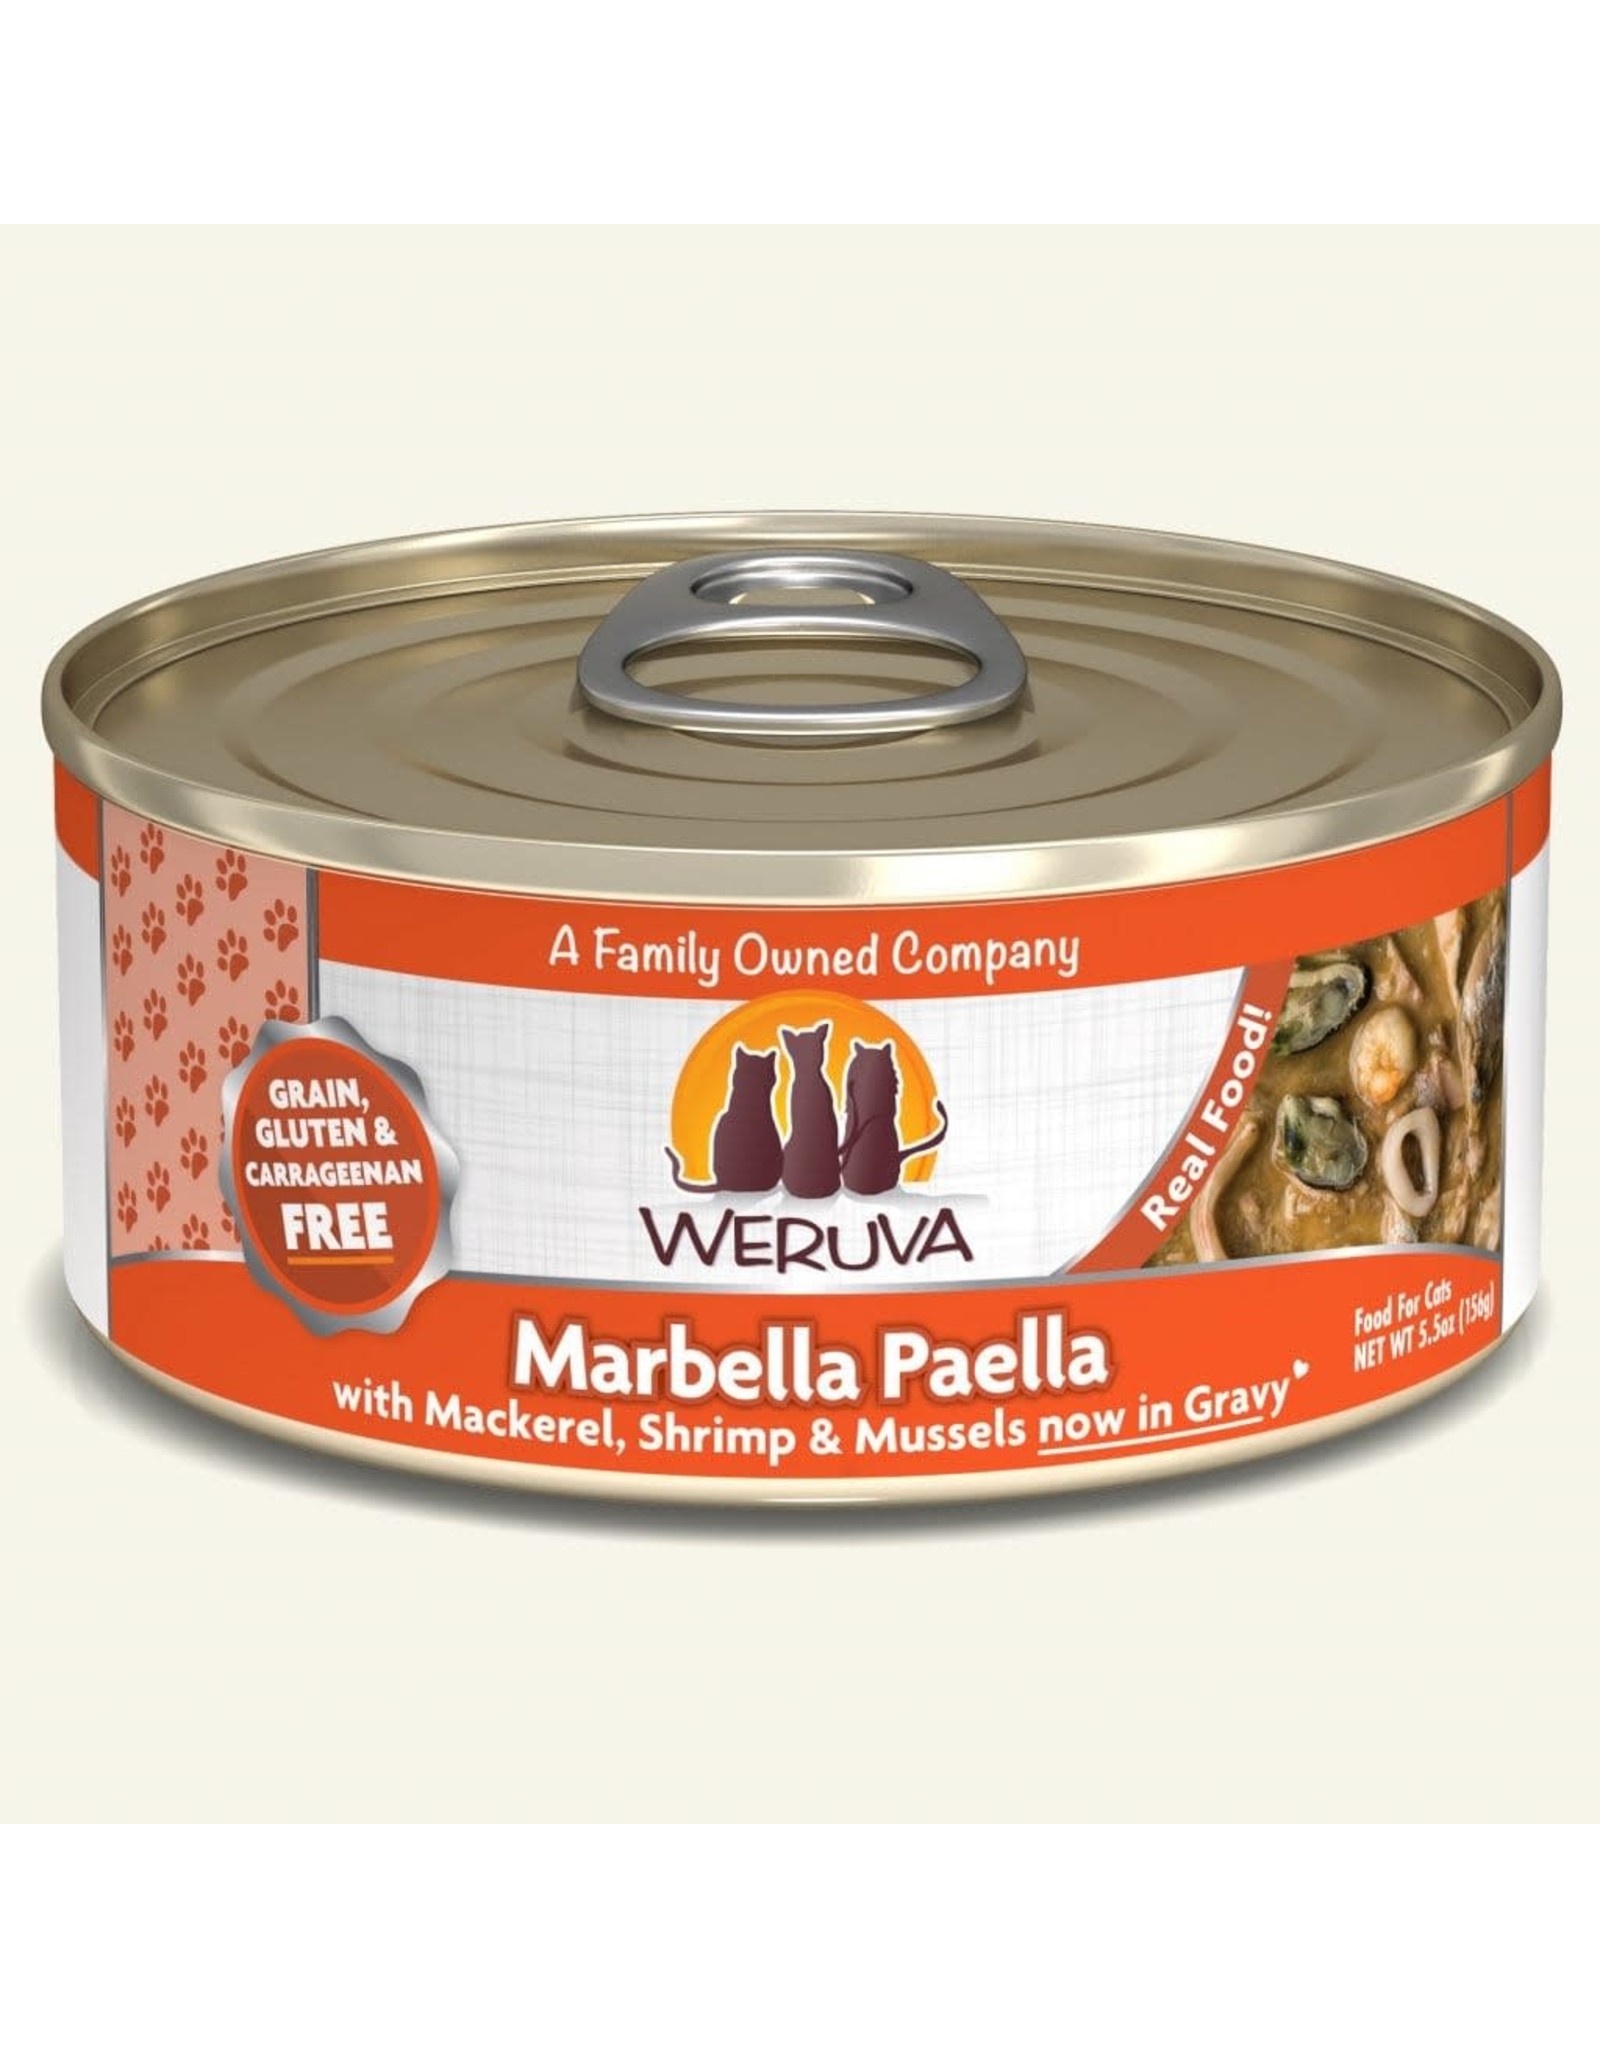 Weruva Weruva marbella paella (maquereau, crevette et moule)5.5oz (chat)